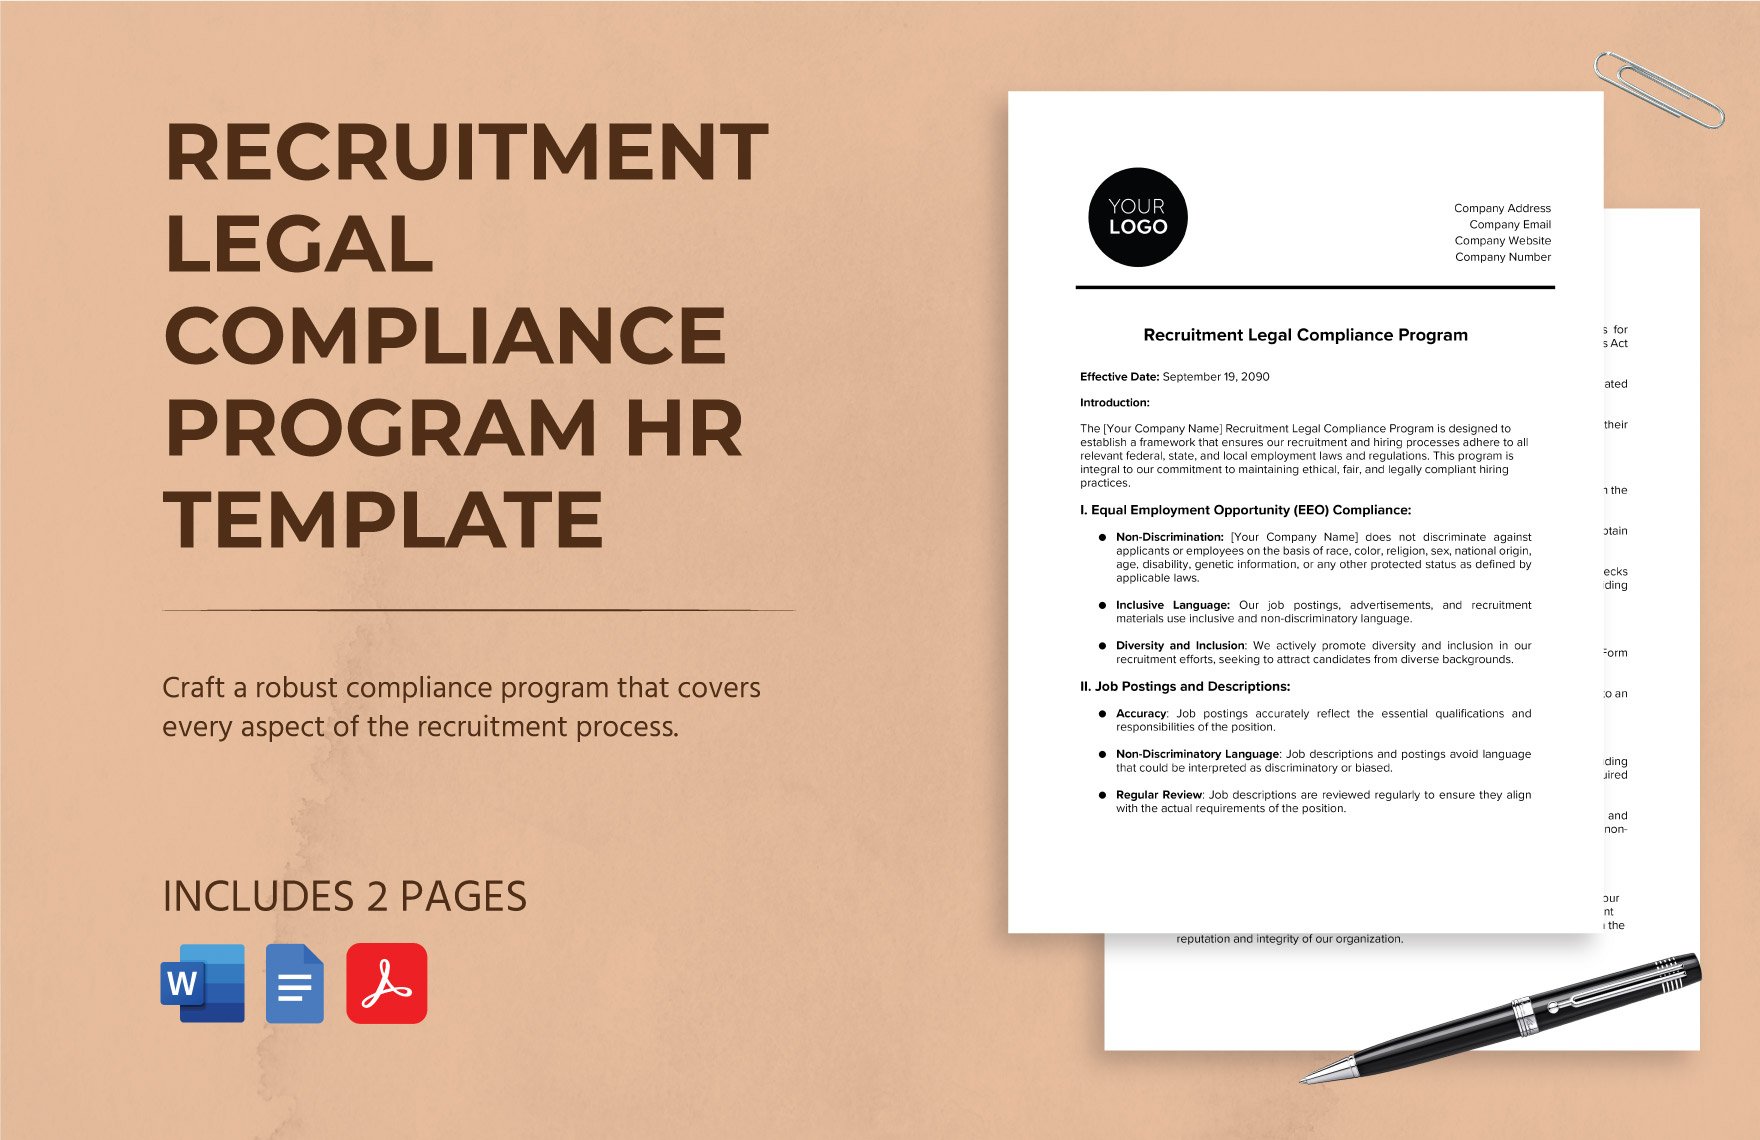 Recruitment Legal Compliance Program HR Template